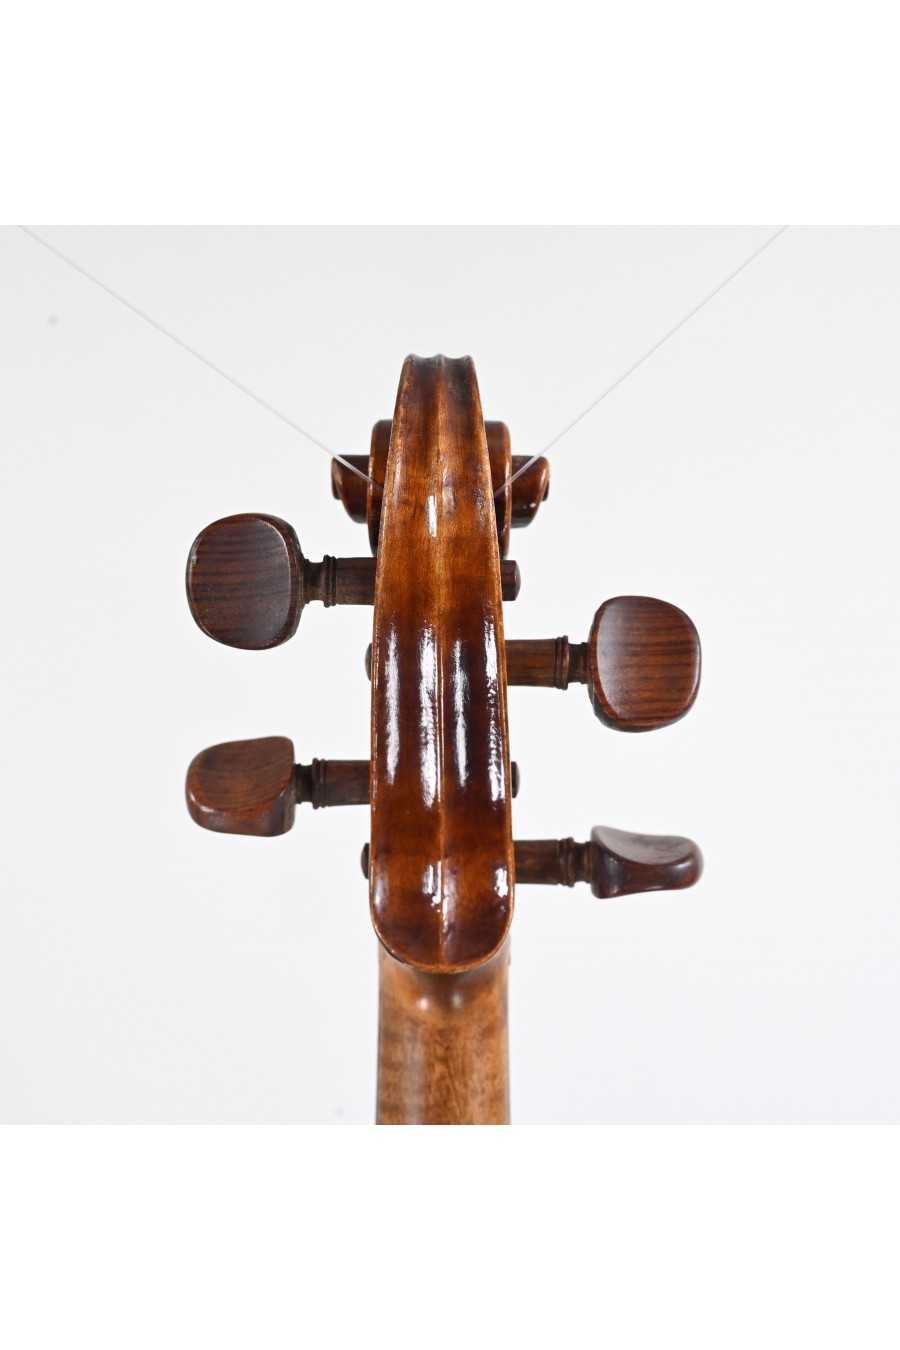 Paul J. B. Chipot French 1926 Violin Back Scroll